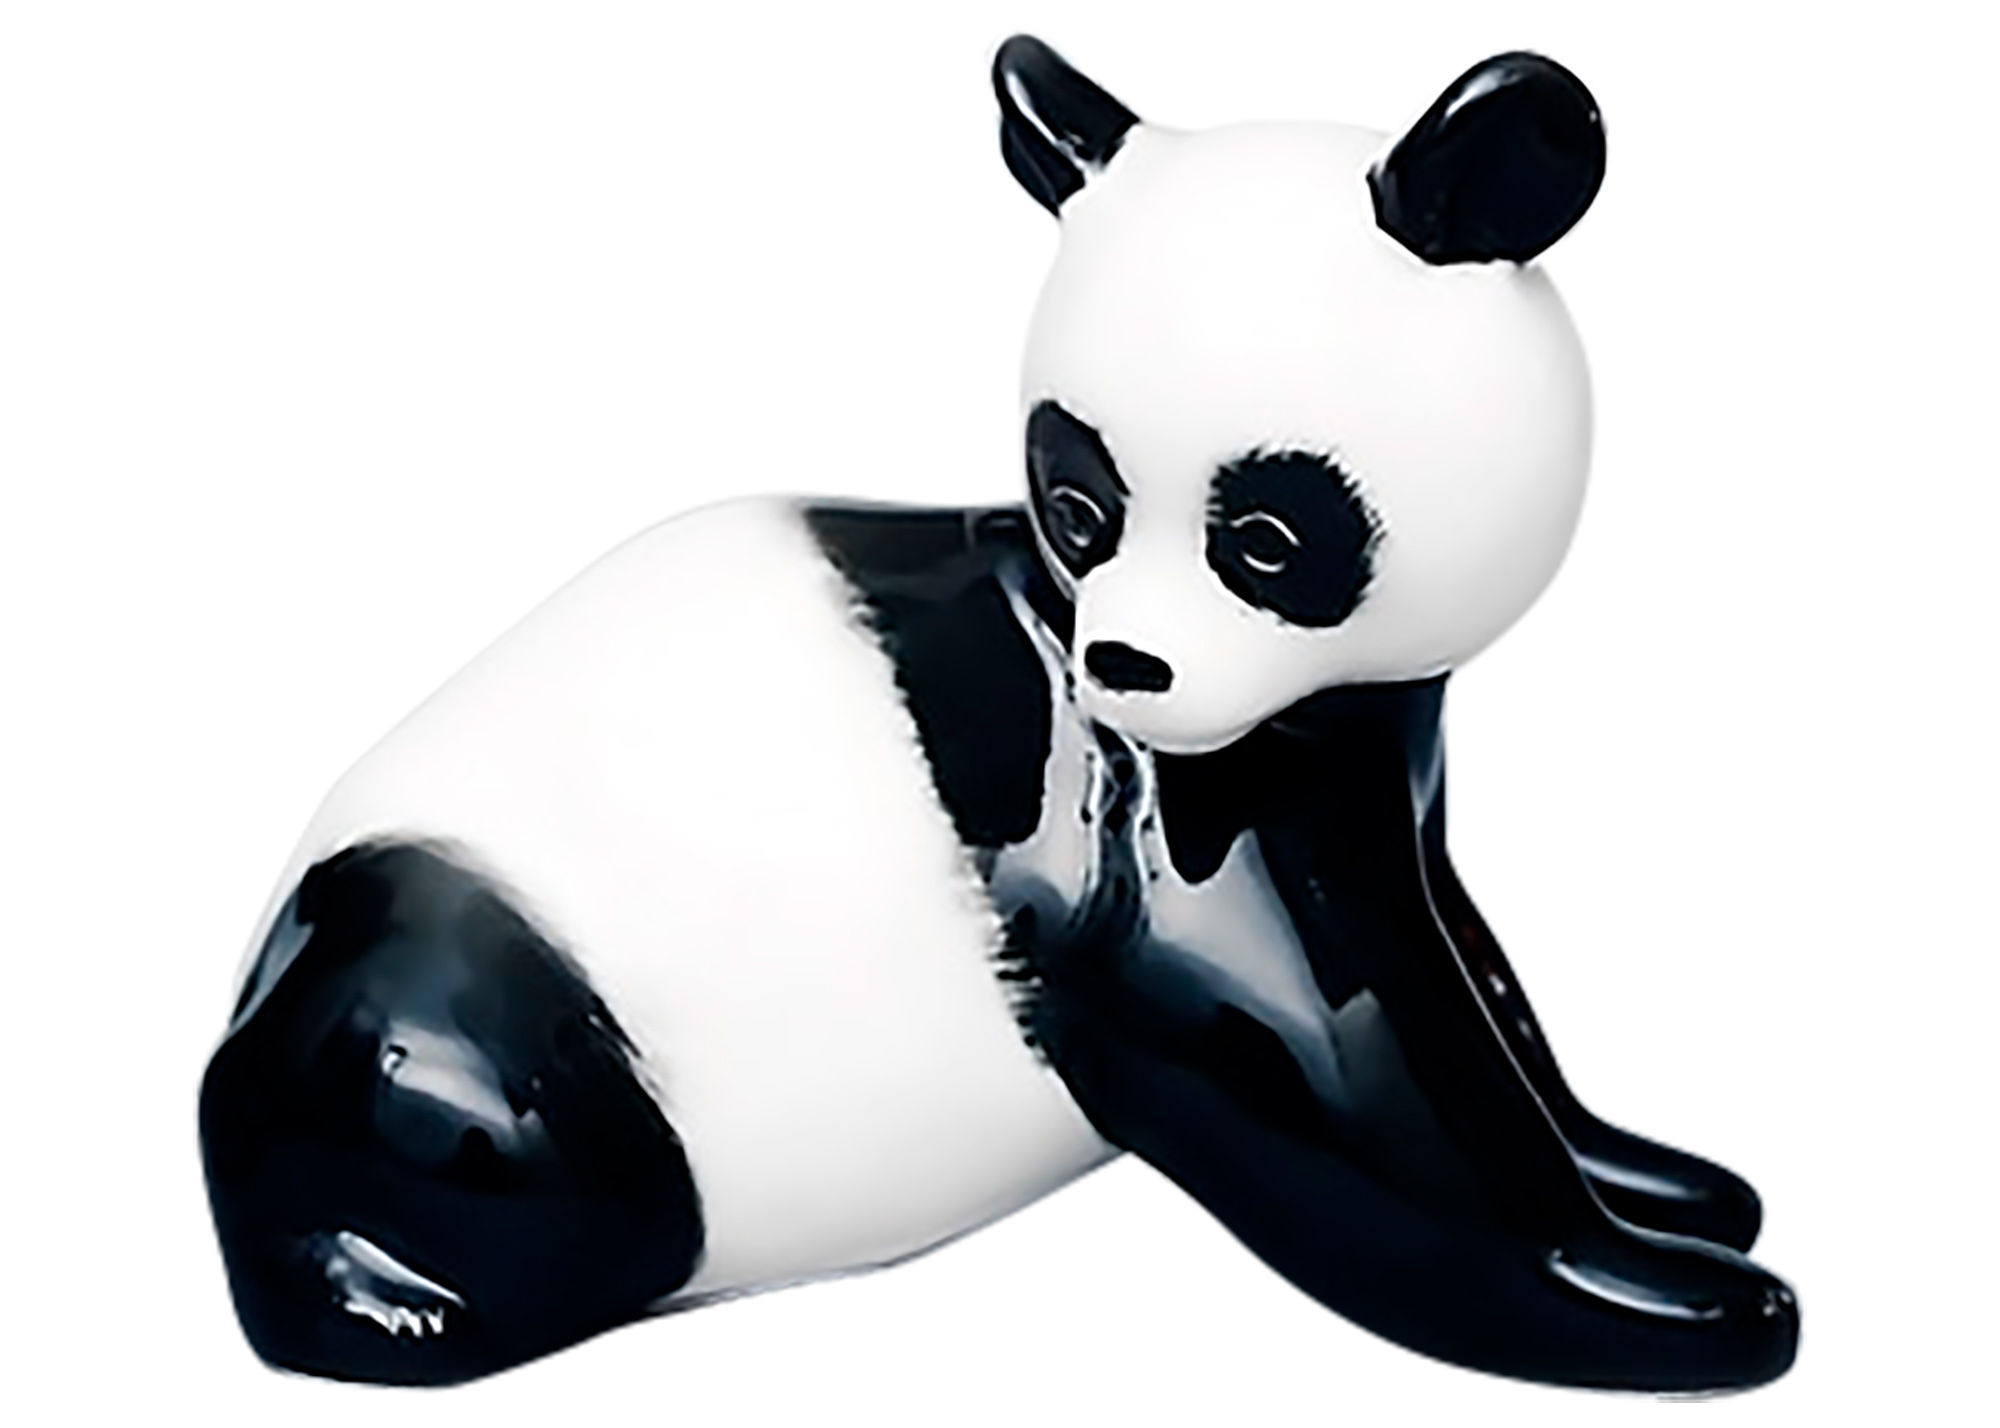 Buy Panda Bear Figurine at GoldenCockerel.com